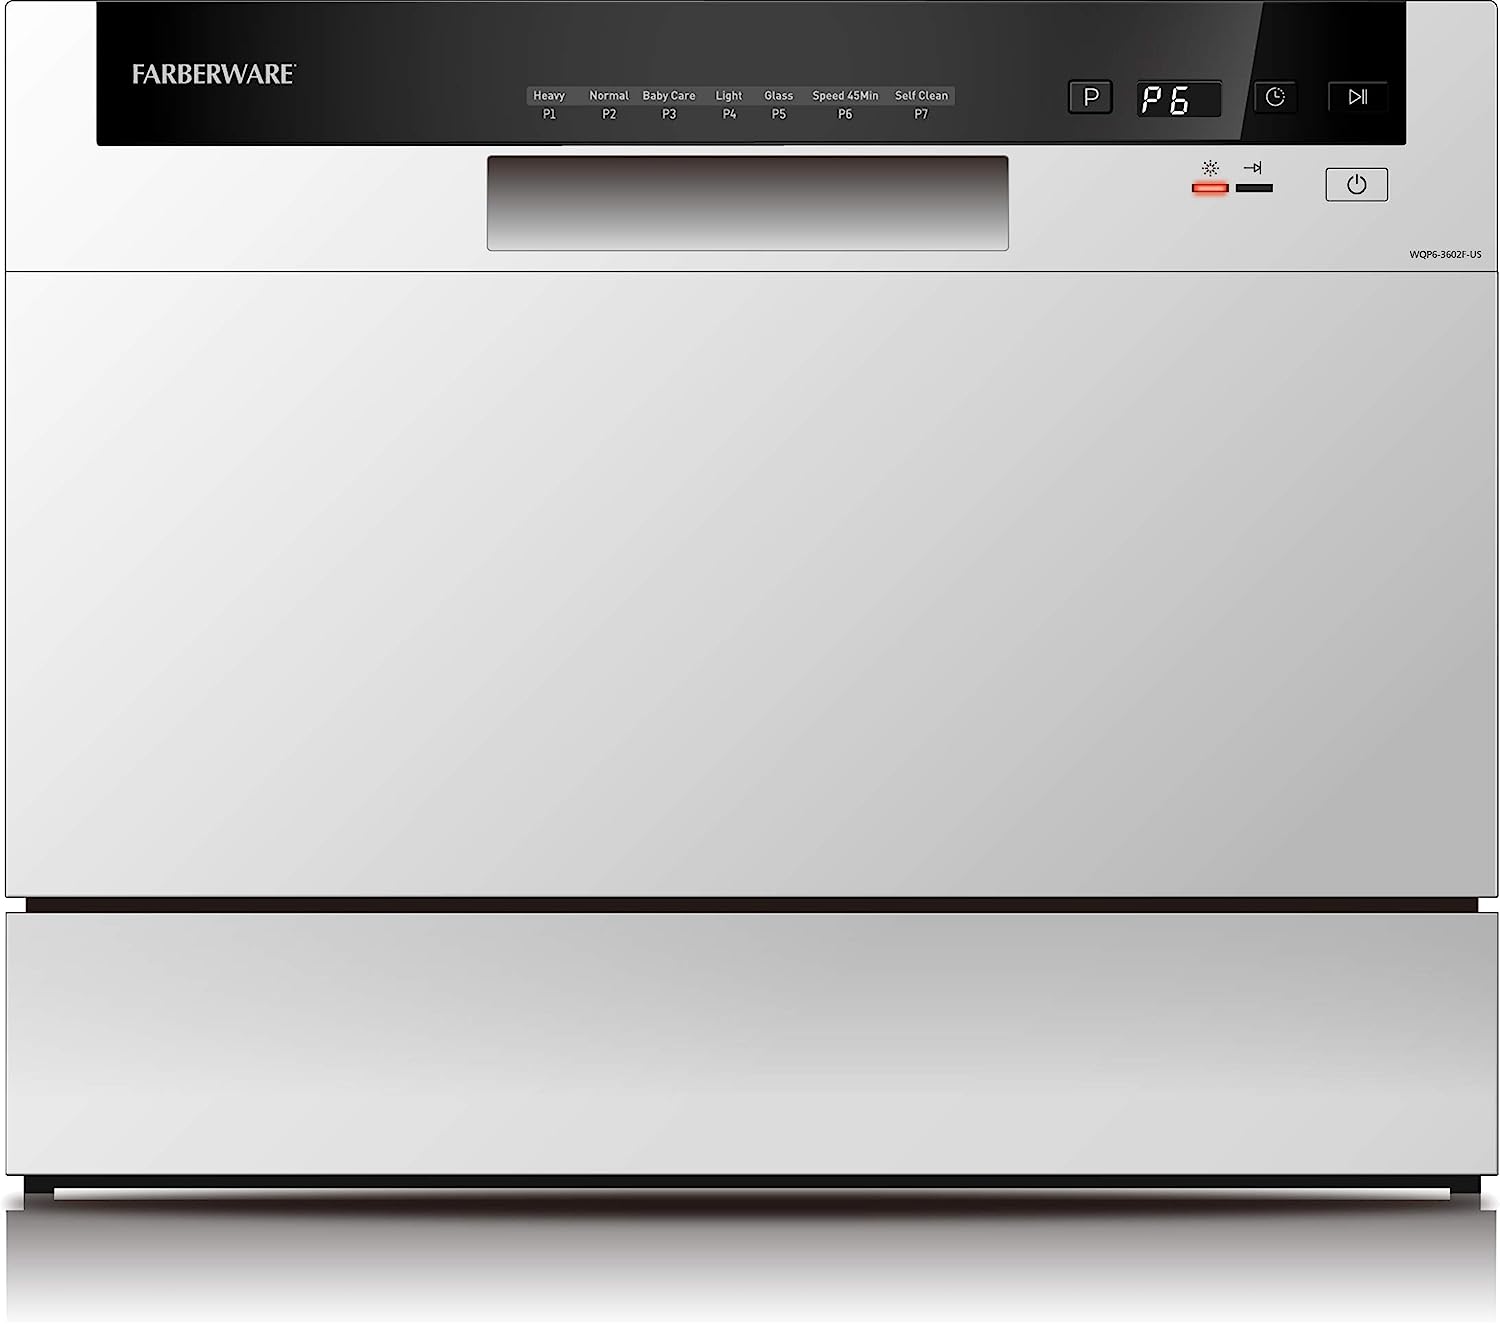 Farberware Portable Countertop Dishwasher - 7-Program [...]